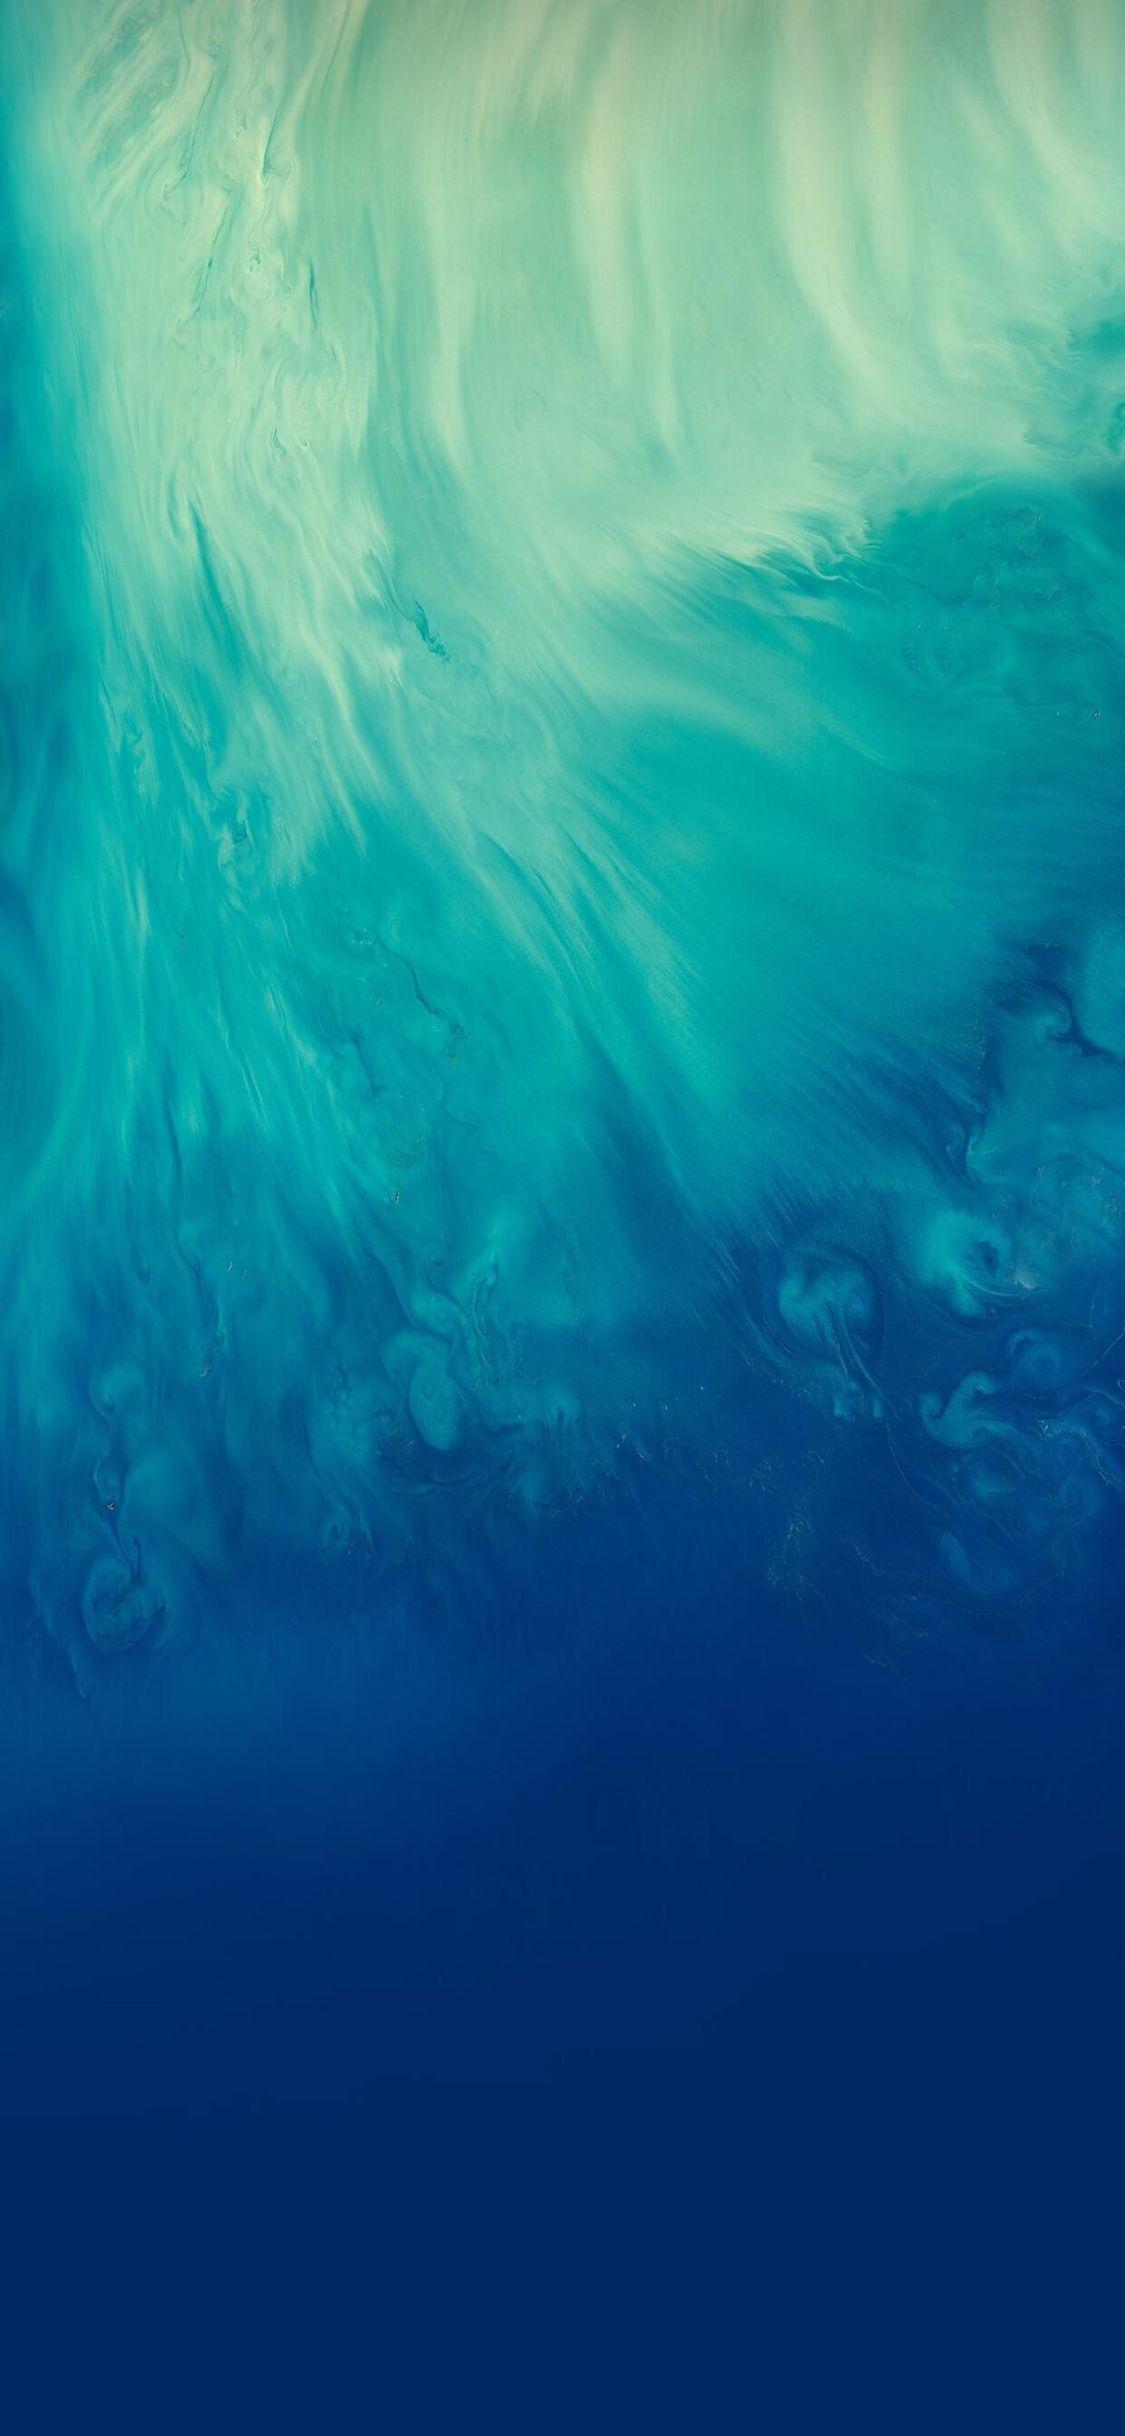 iOS 11, iPhone X, Aqua, blue, Water, underwater, abstract